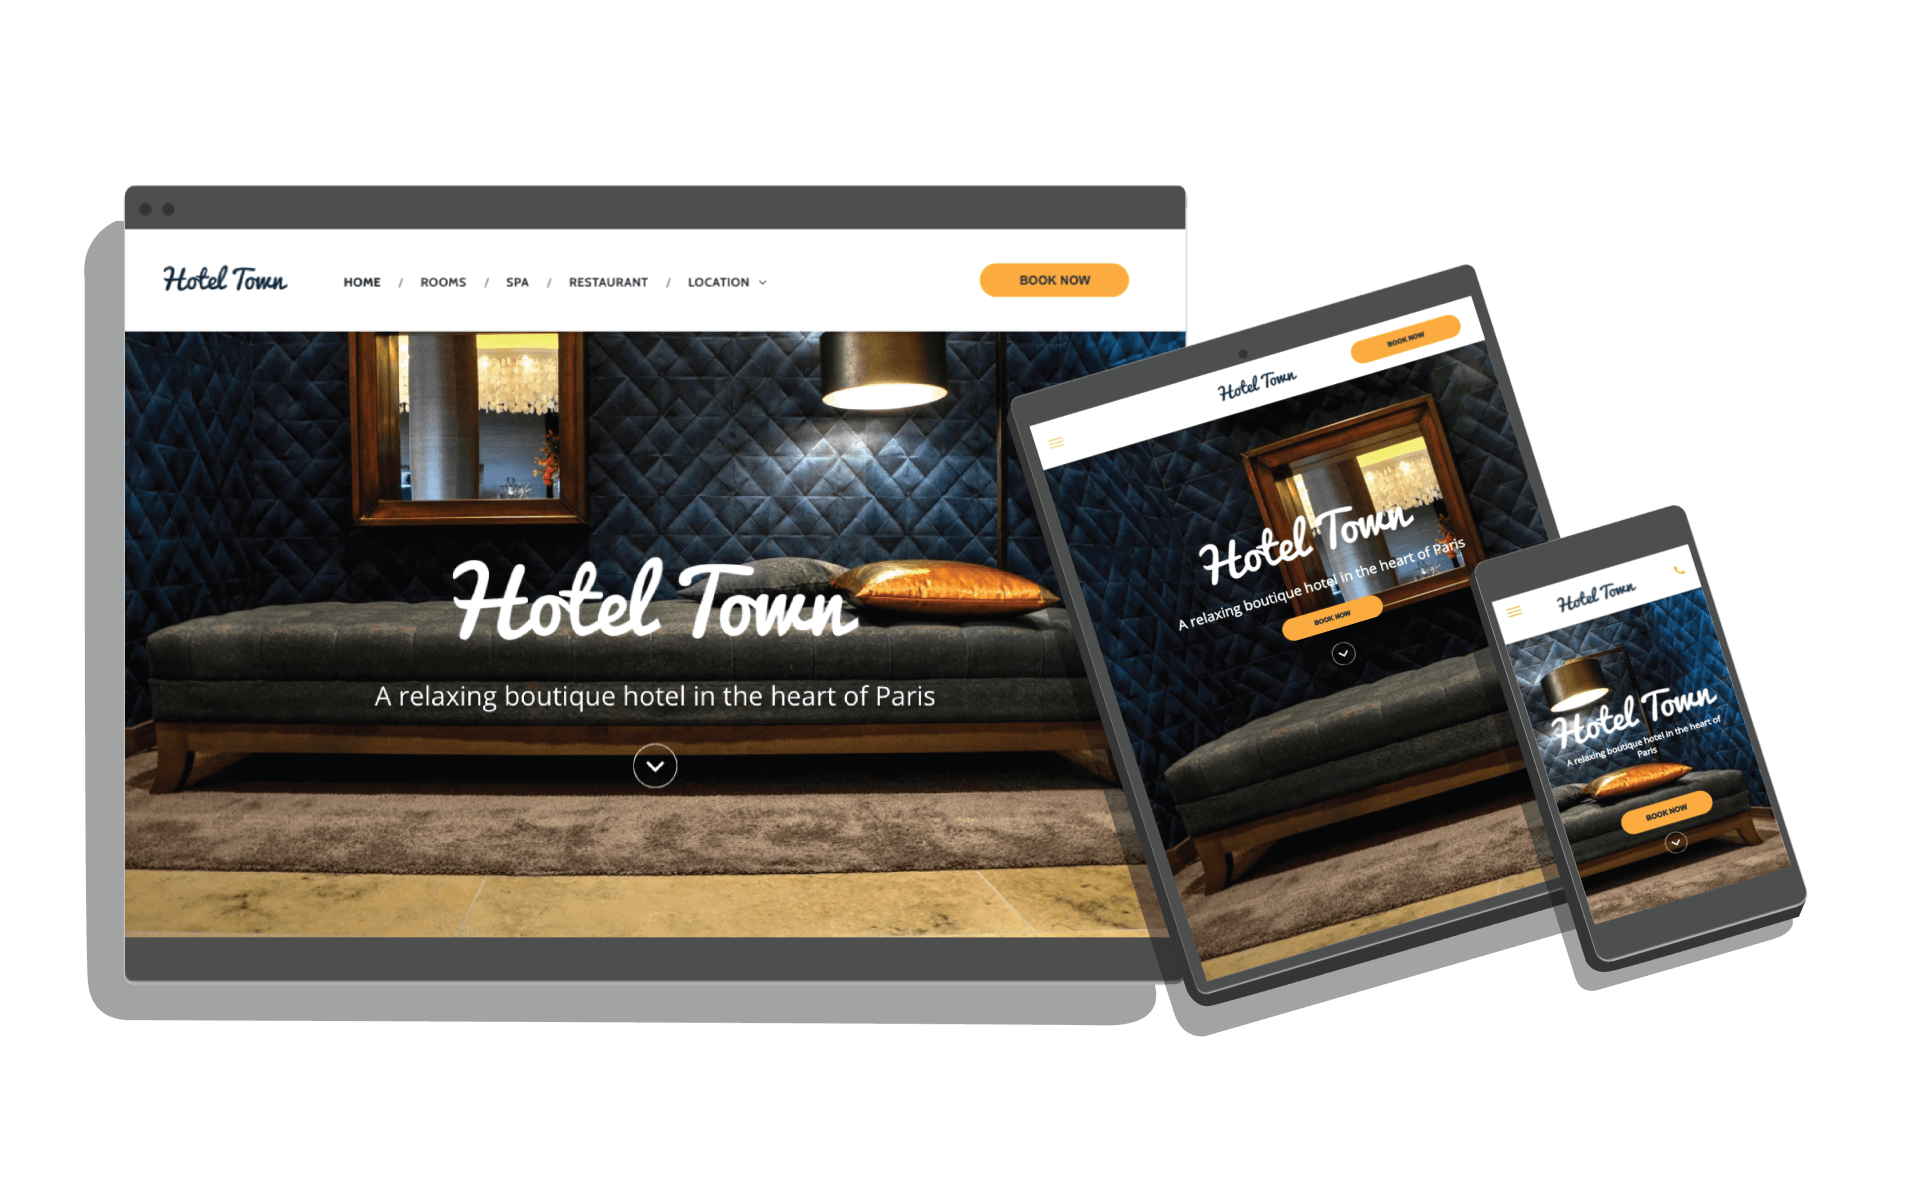 Responsive Web Design for Hotels